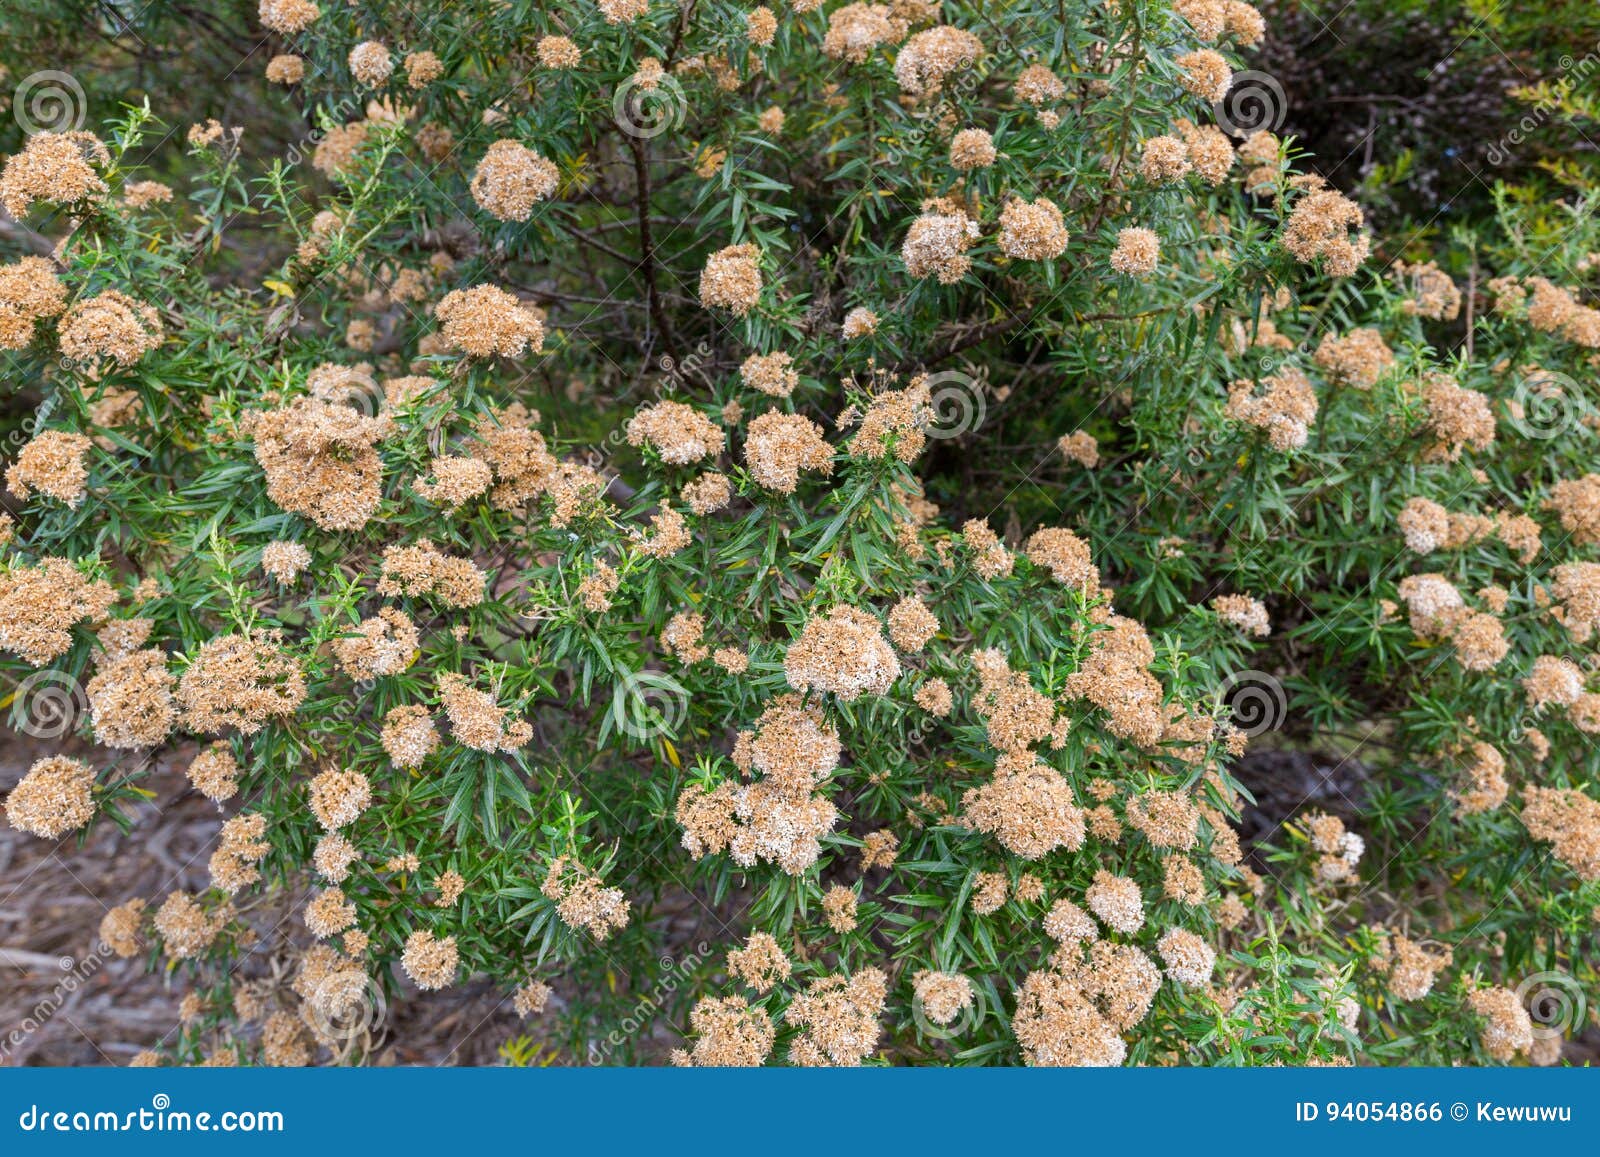 flowers of tree everlasting shrub, ozothamnus ferrugineus in tasmania, australia.